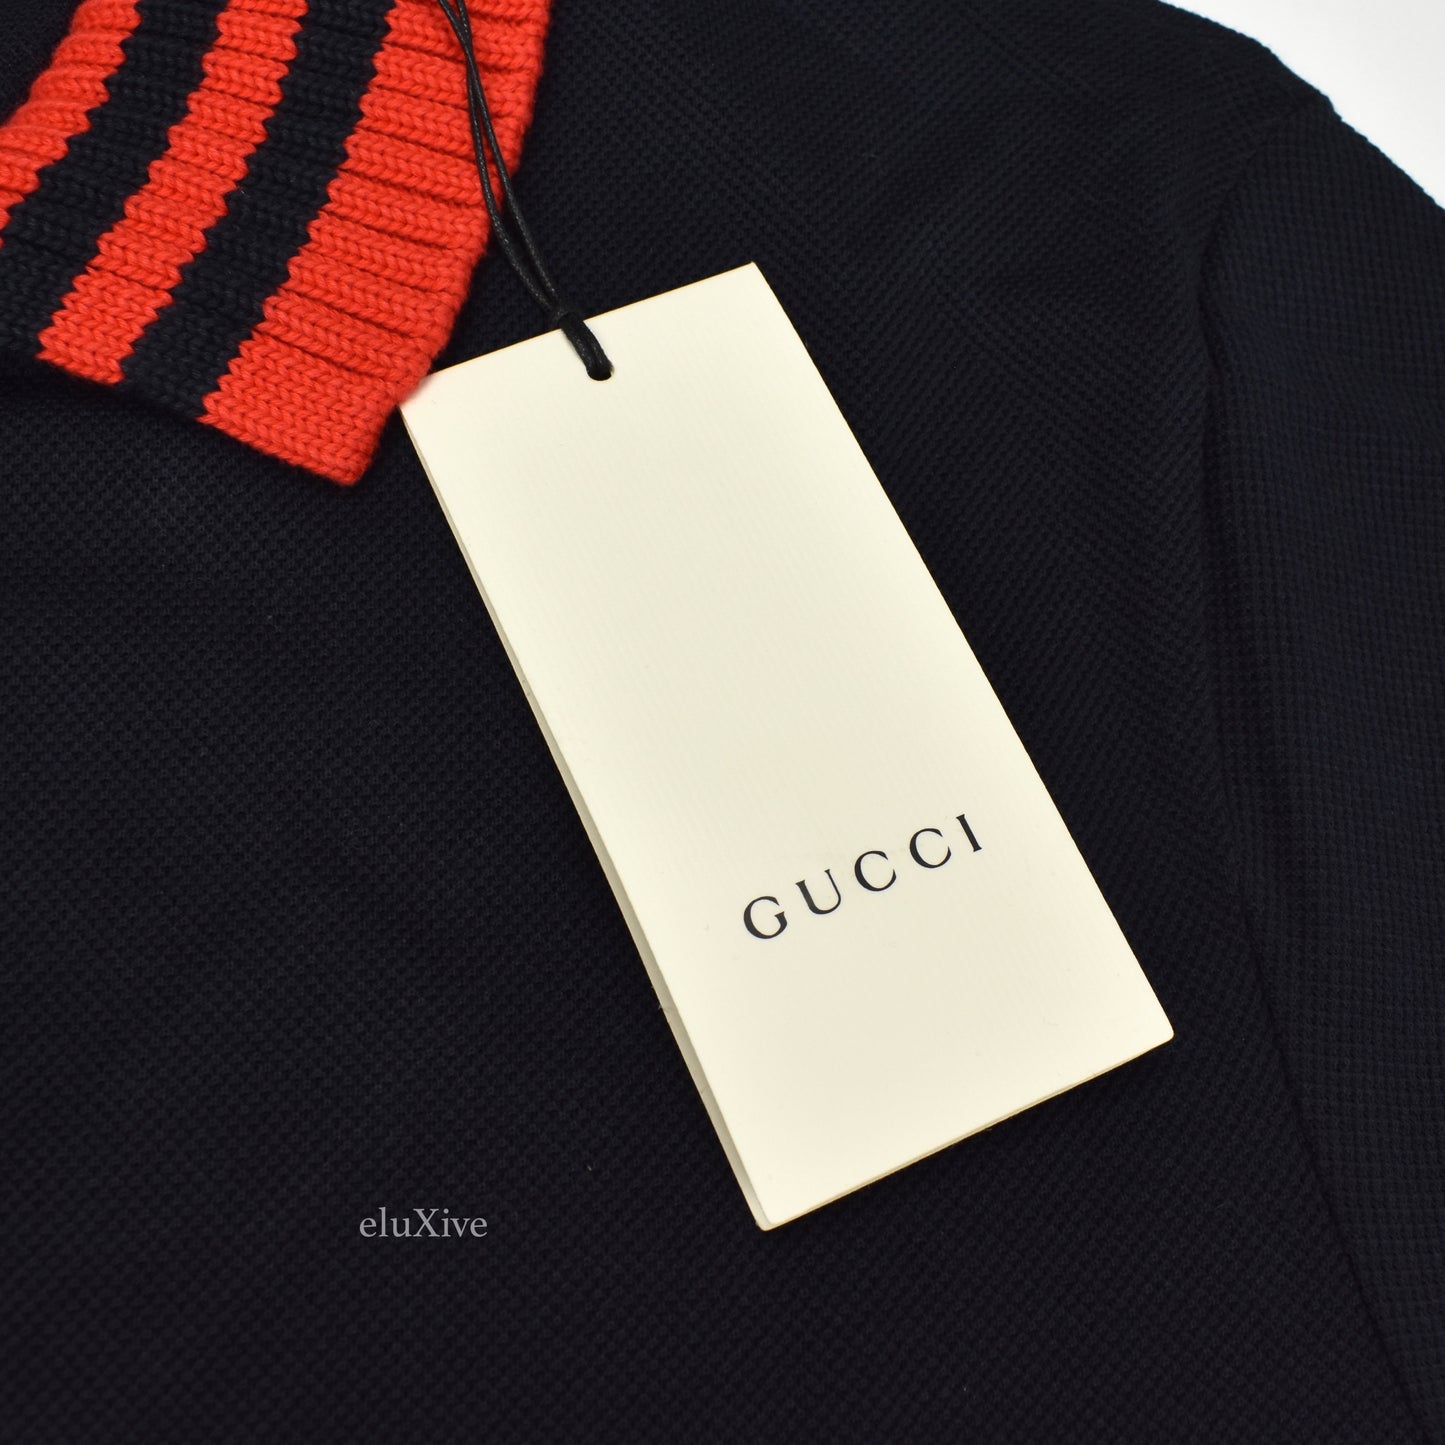 Gucci - Navy Knit Collar Polo Shirt